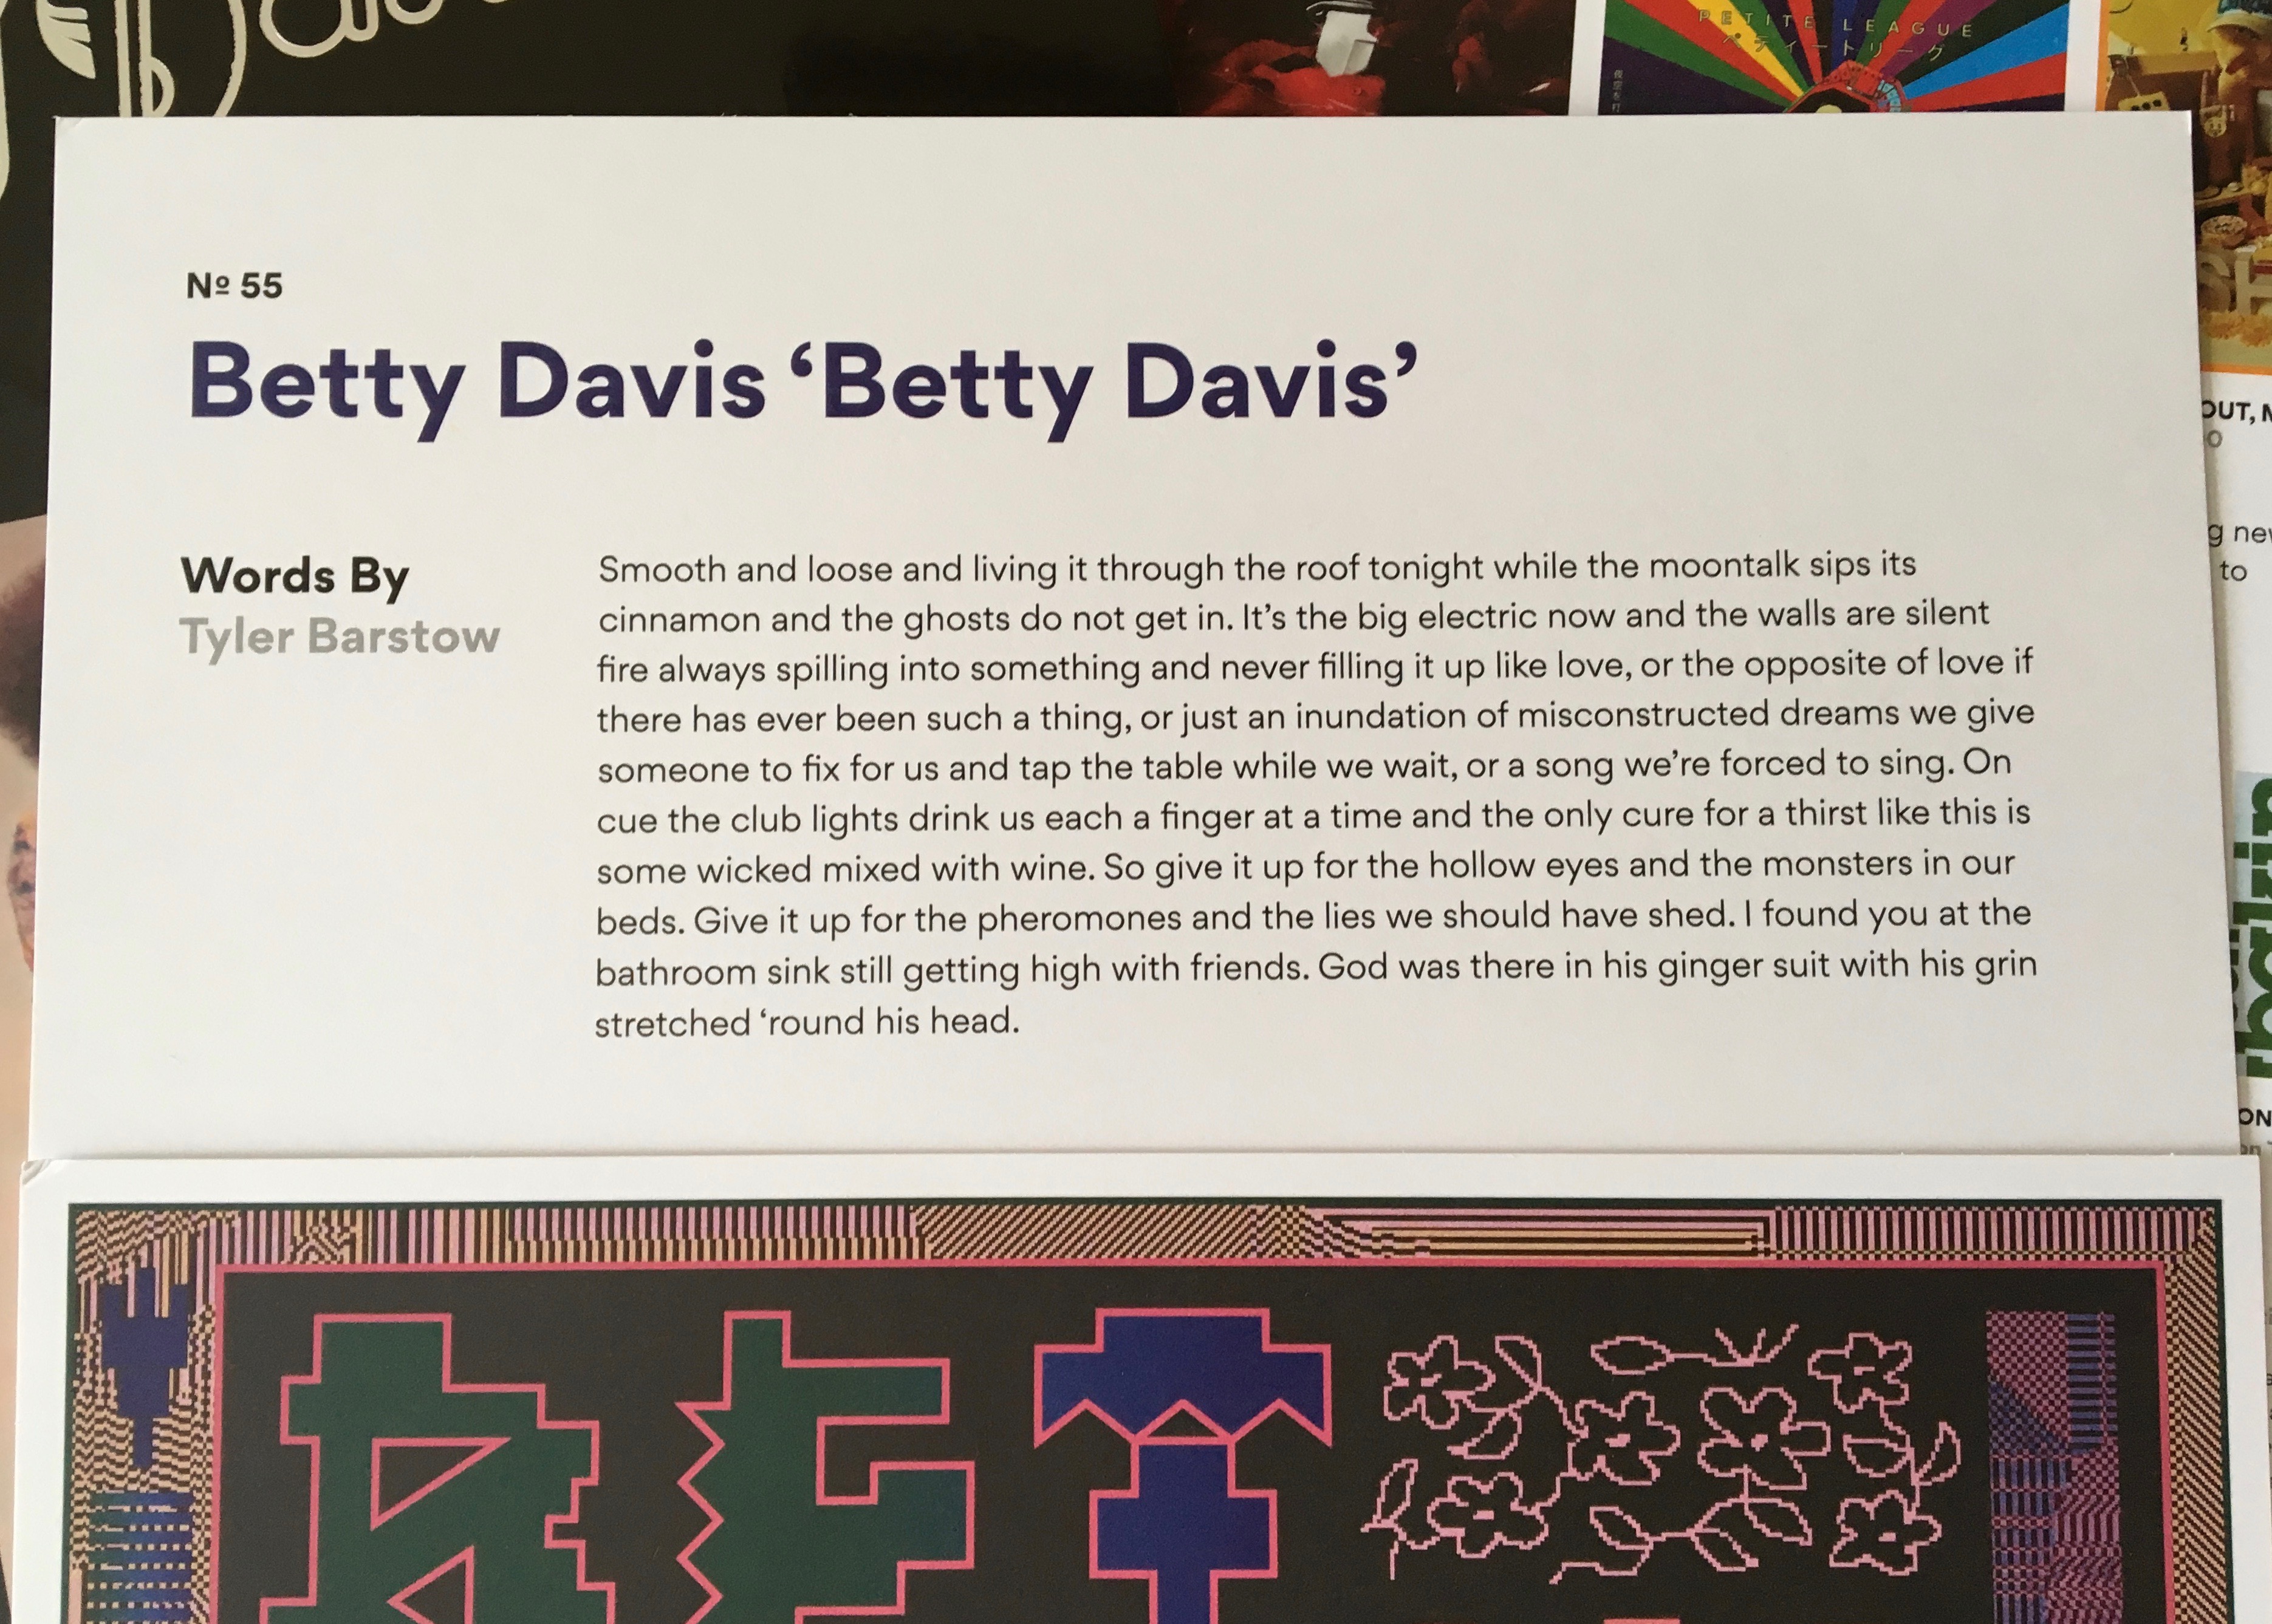 Geek insider, geekinsider, geekinsider. Com,, vinyl me, please july edition: betty davis 'betty davis', culture, events